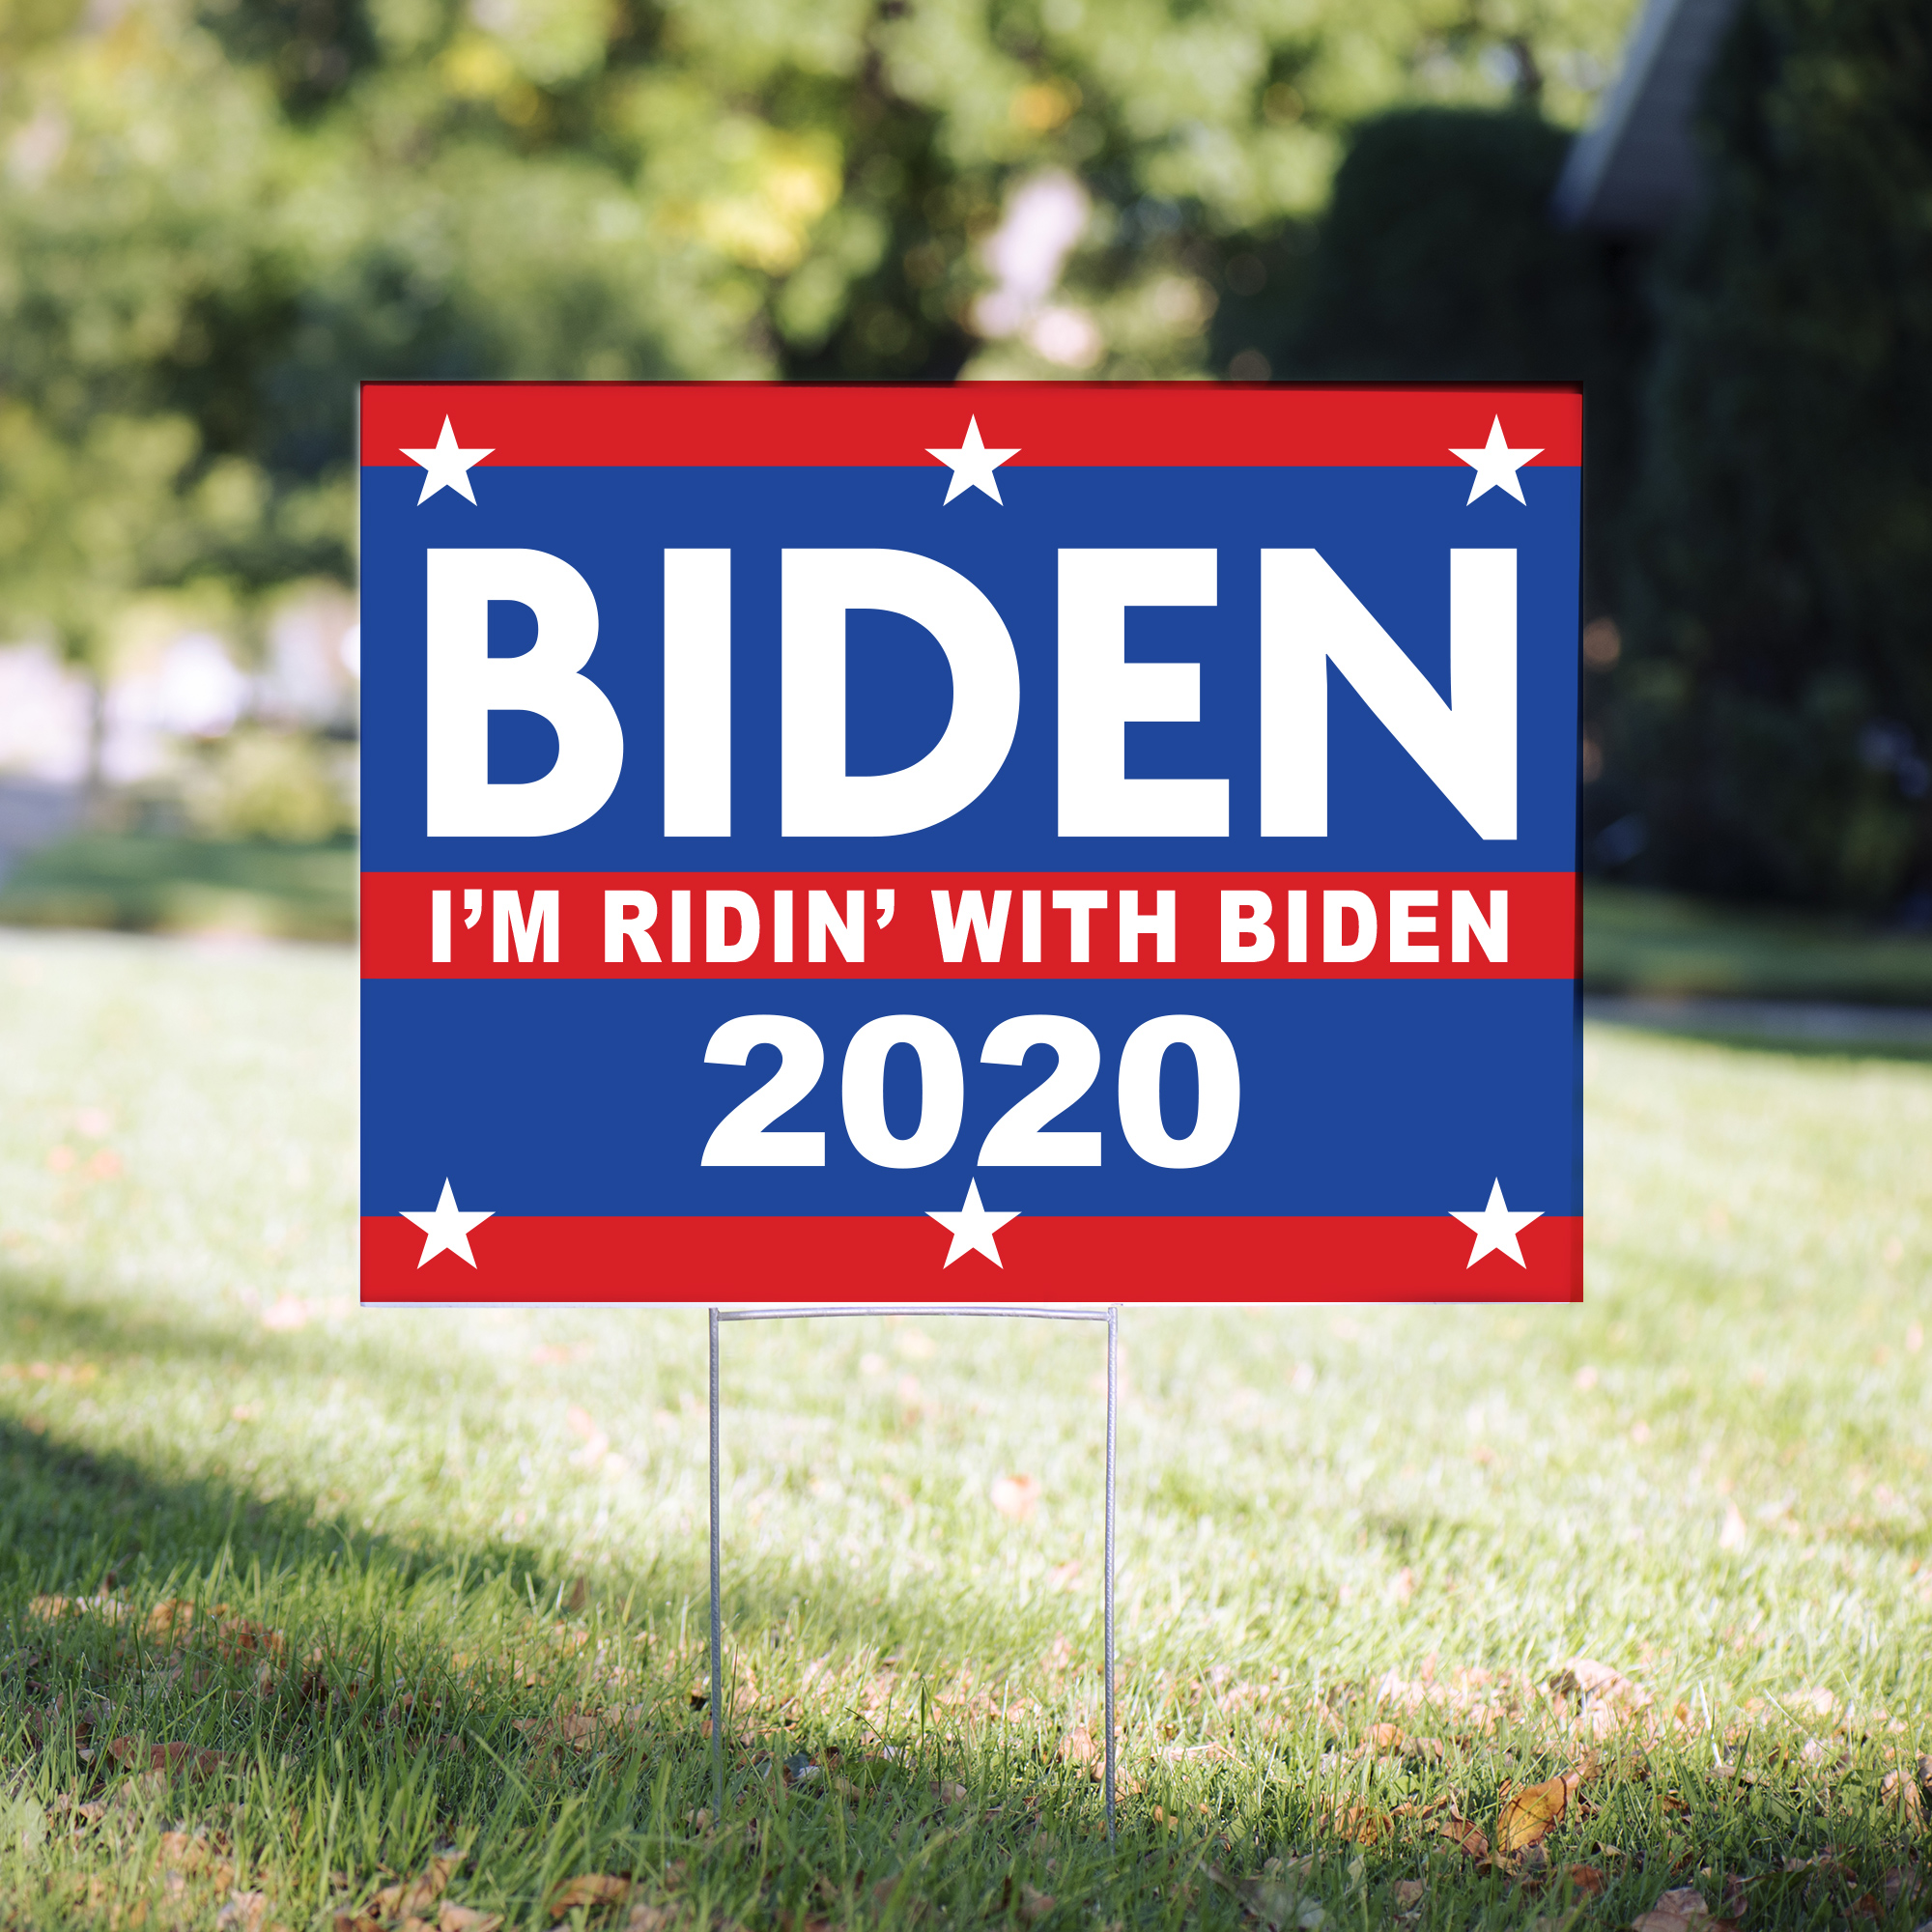 Biden Ridin' with 2020 Political Yard Sign - 24 x 18 inch